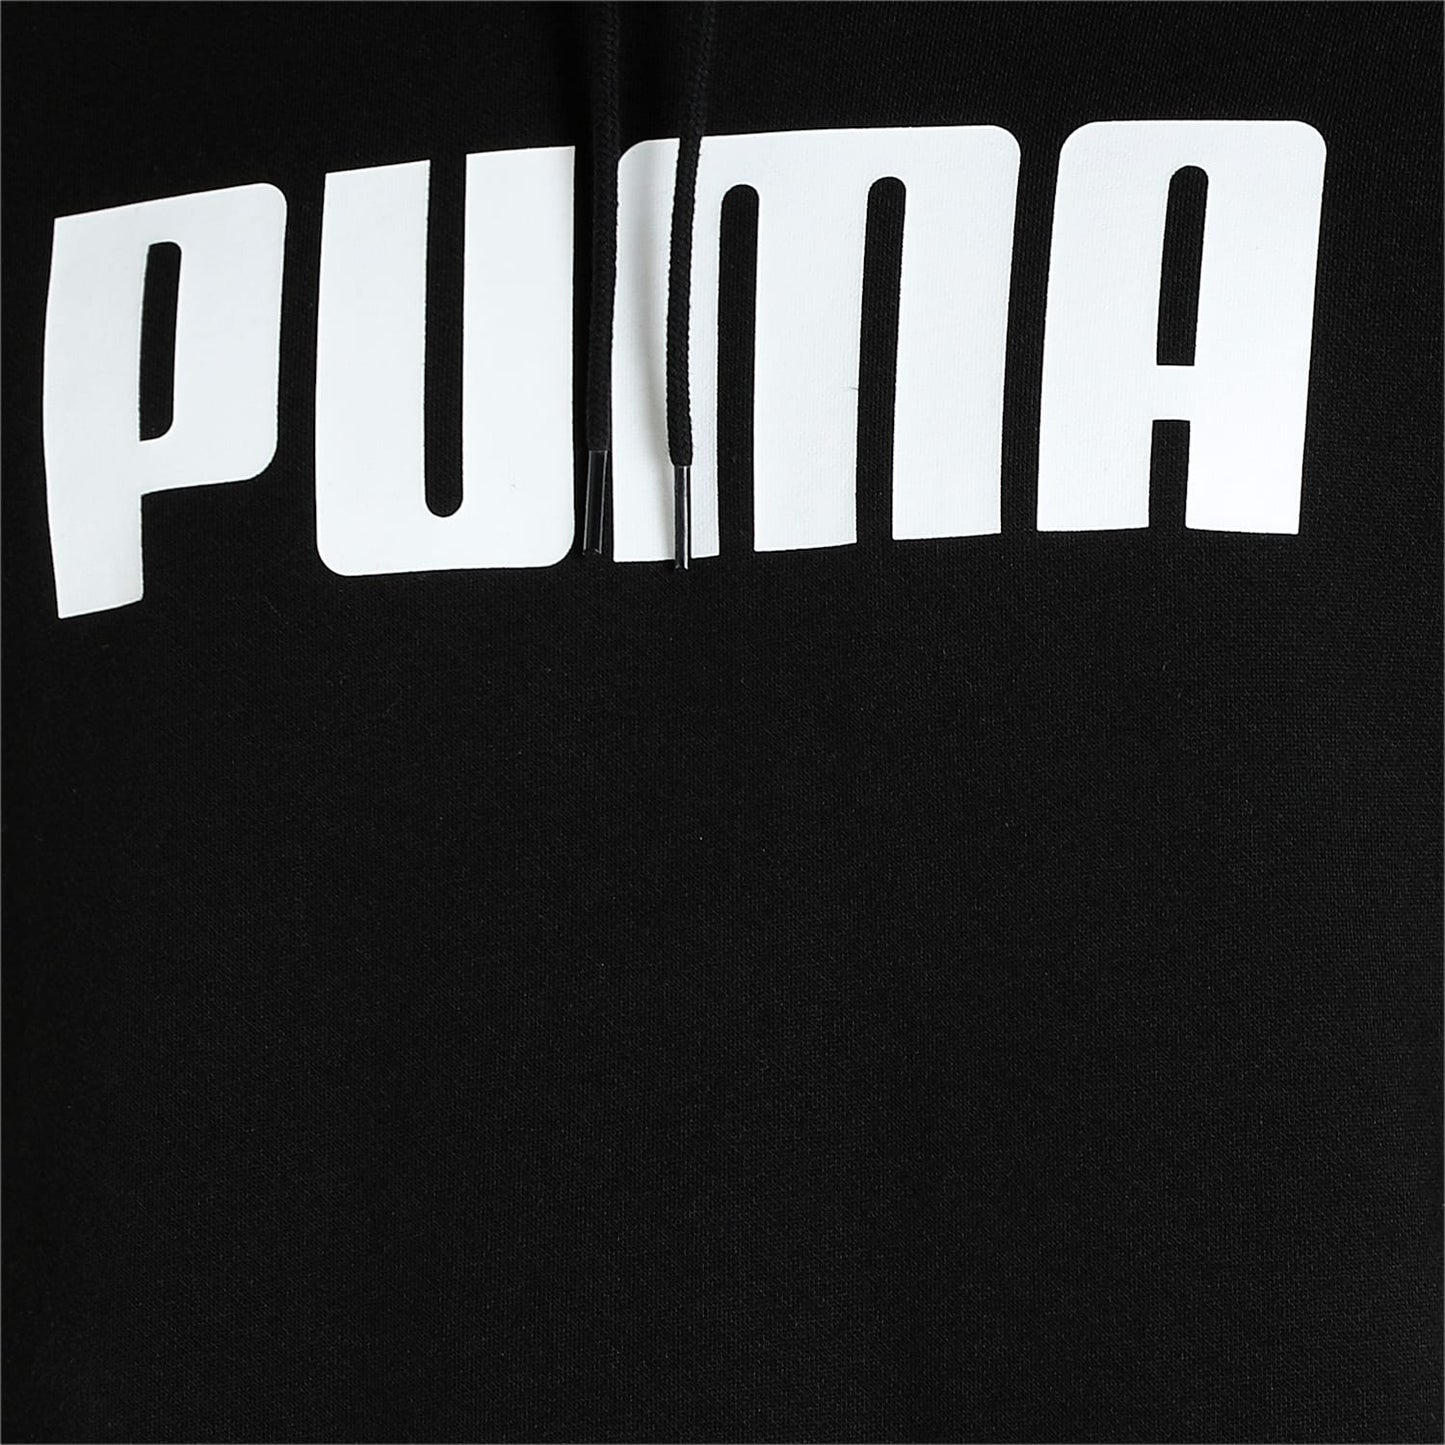 puma logo hoody 847237 01